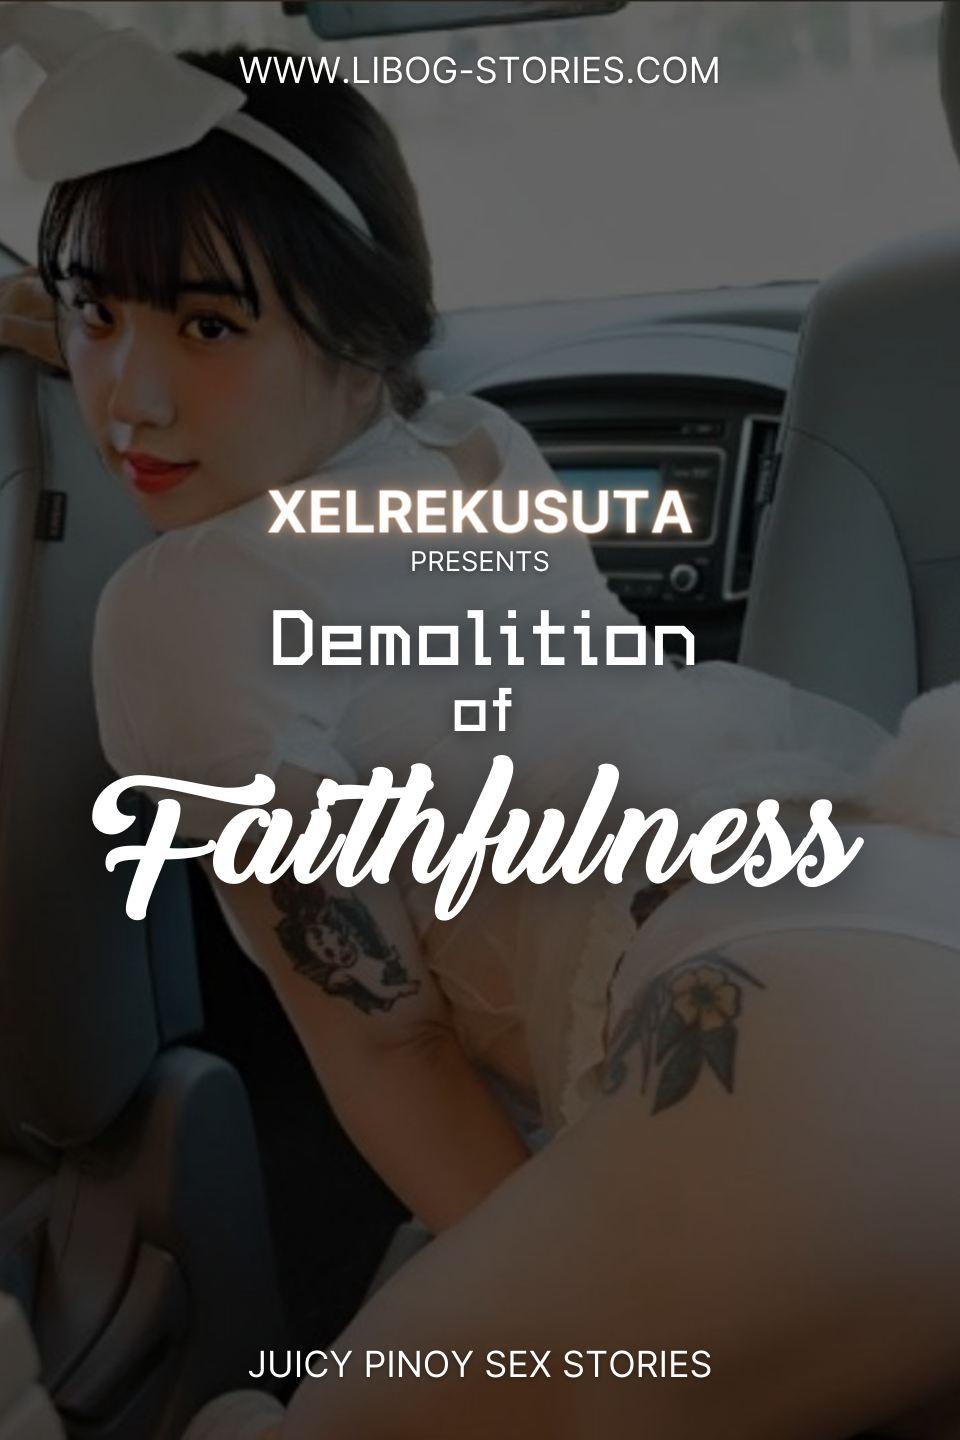 Demolition Of Faithfulness